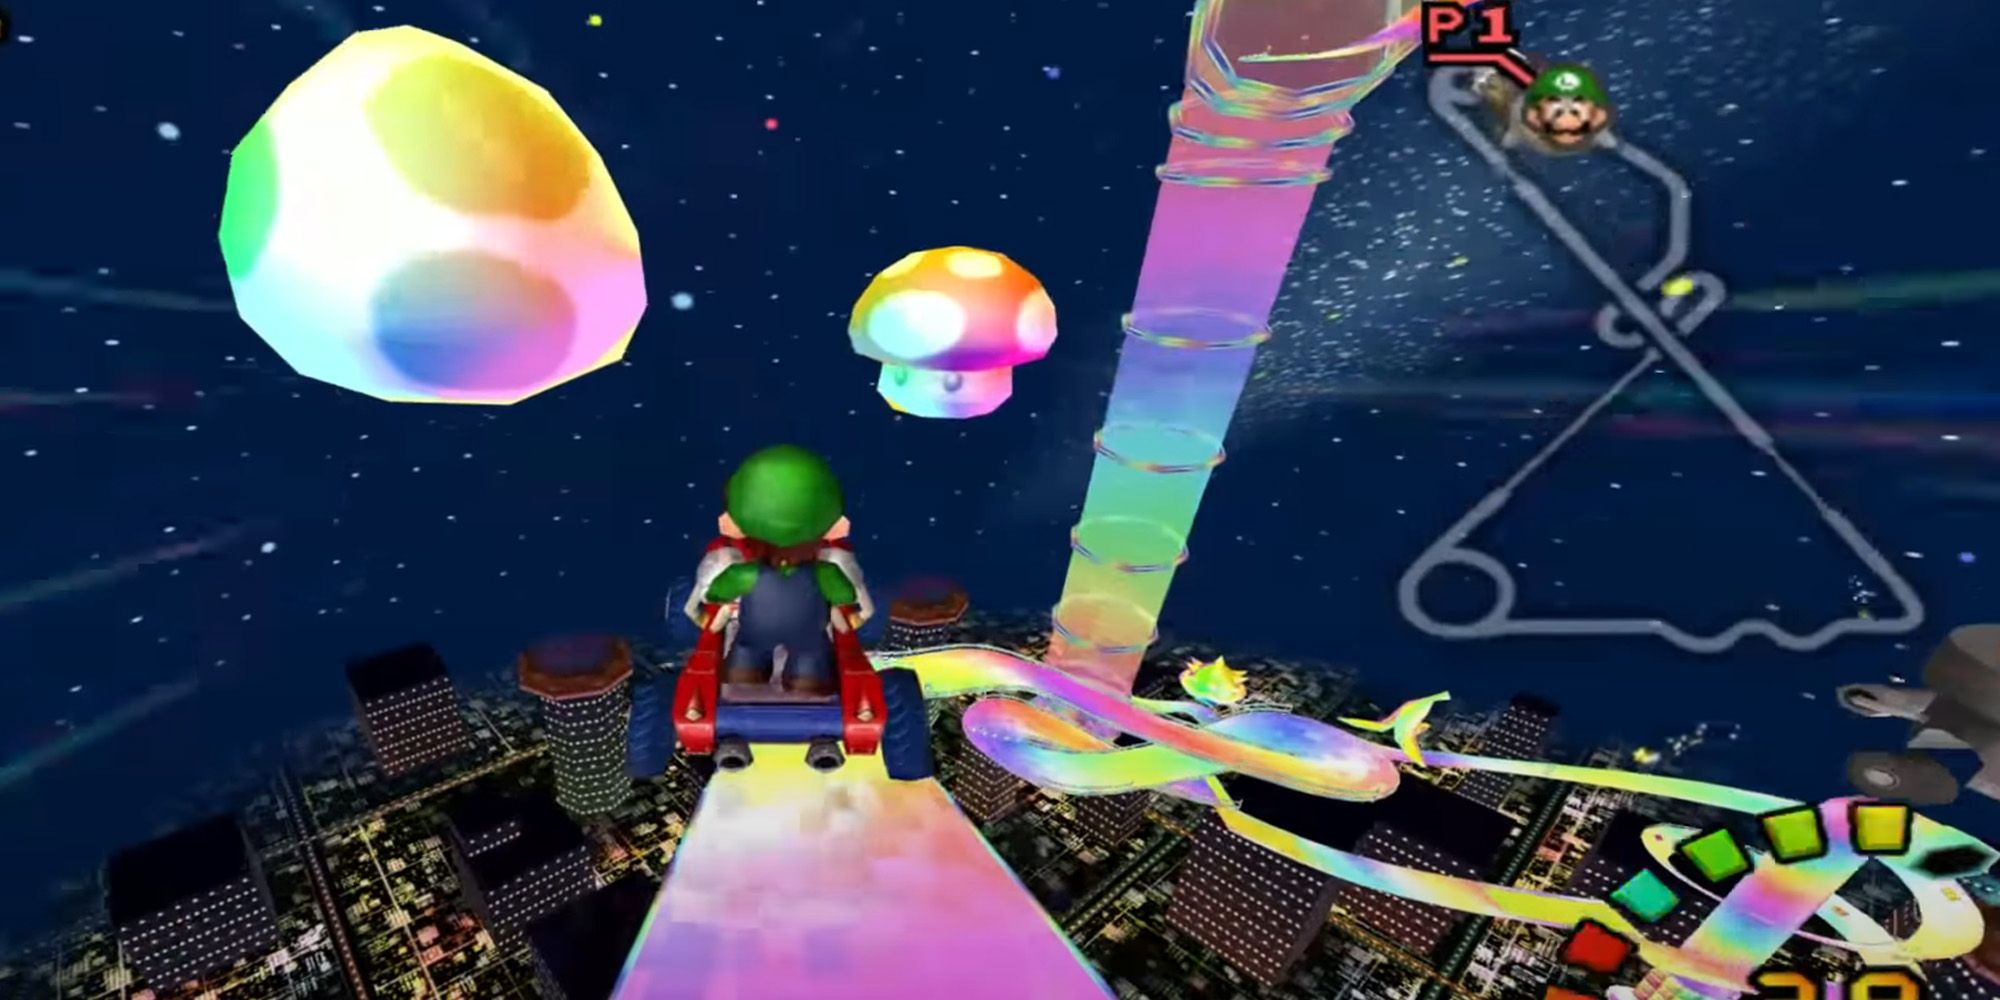 Mario Kart Double Dash - Mario and Luigi racing down Rainbow Road